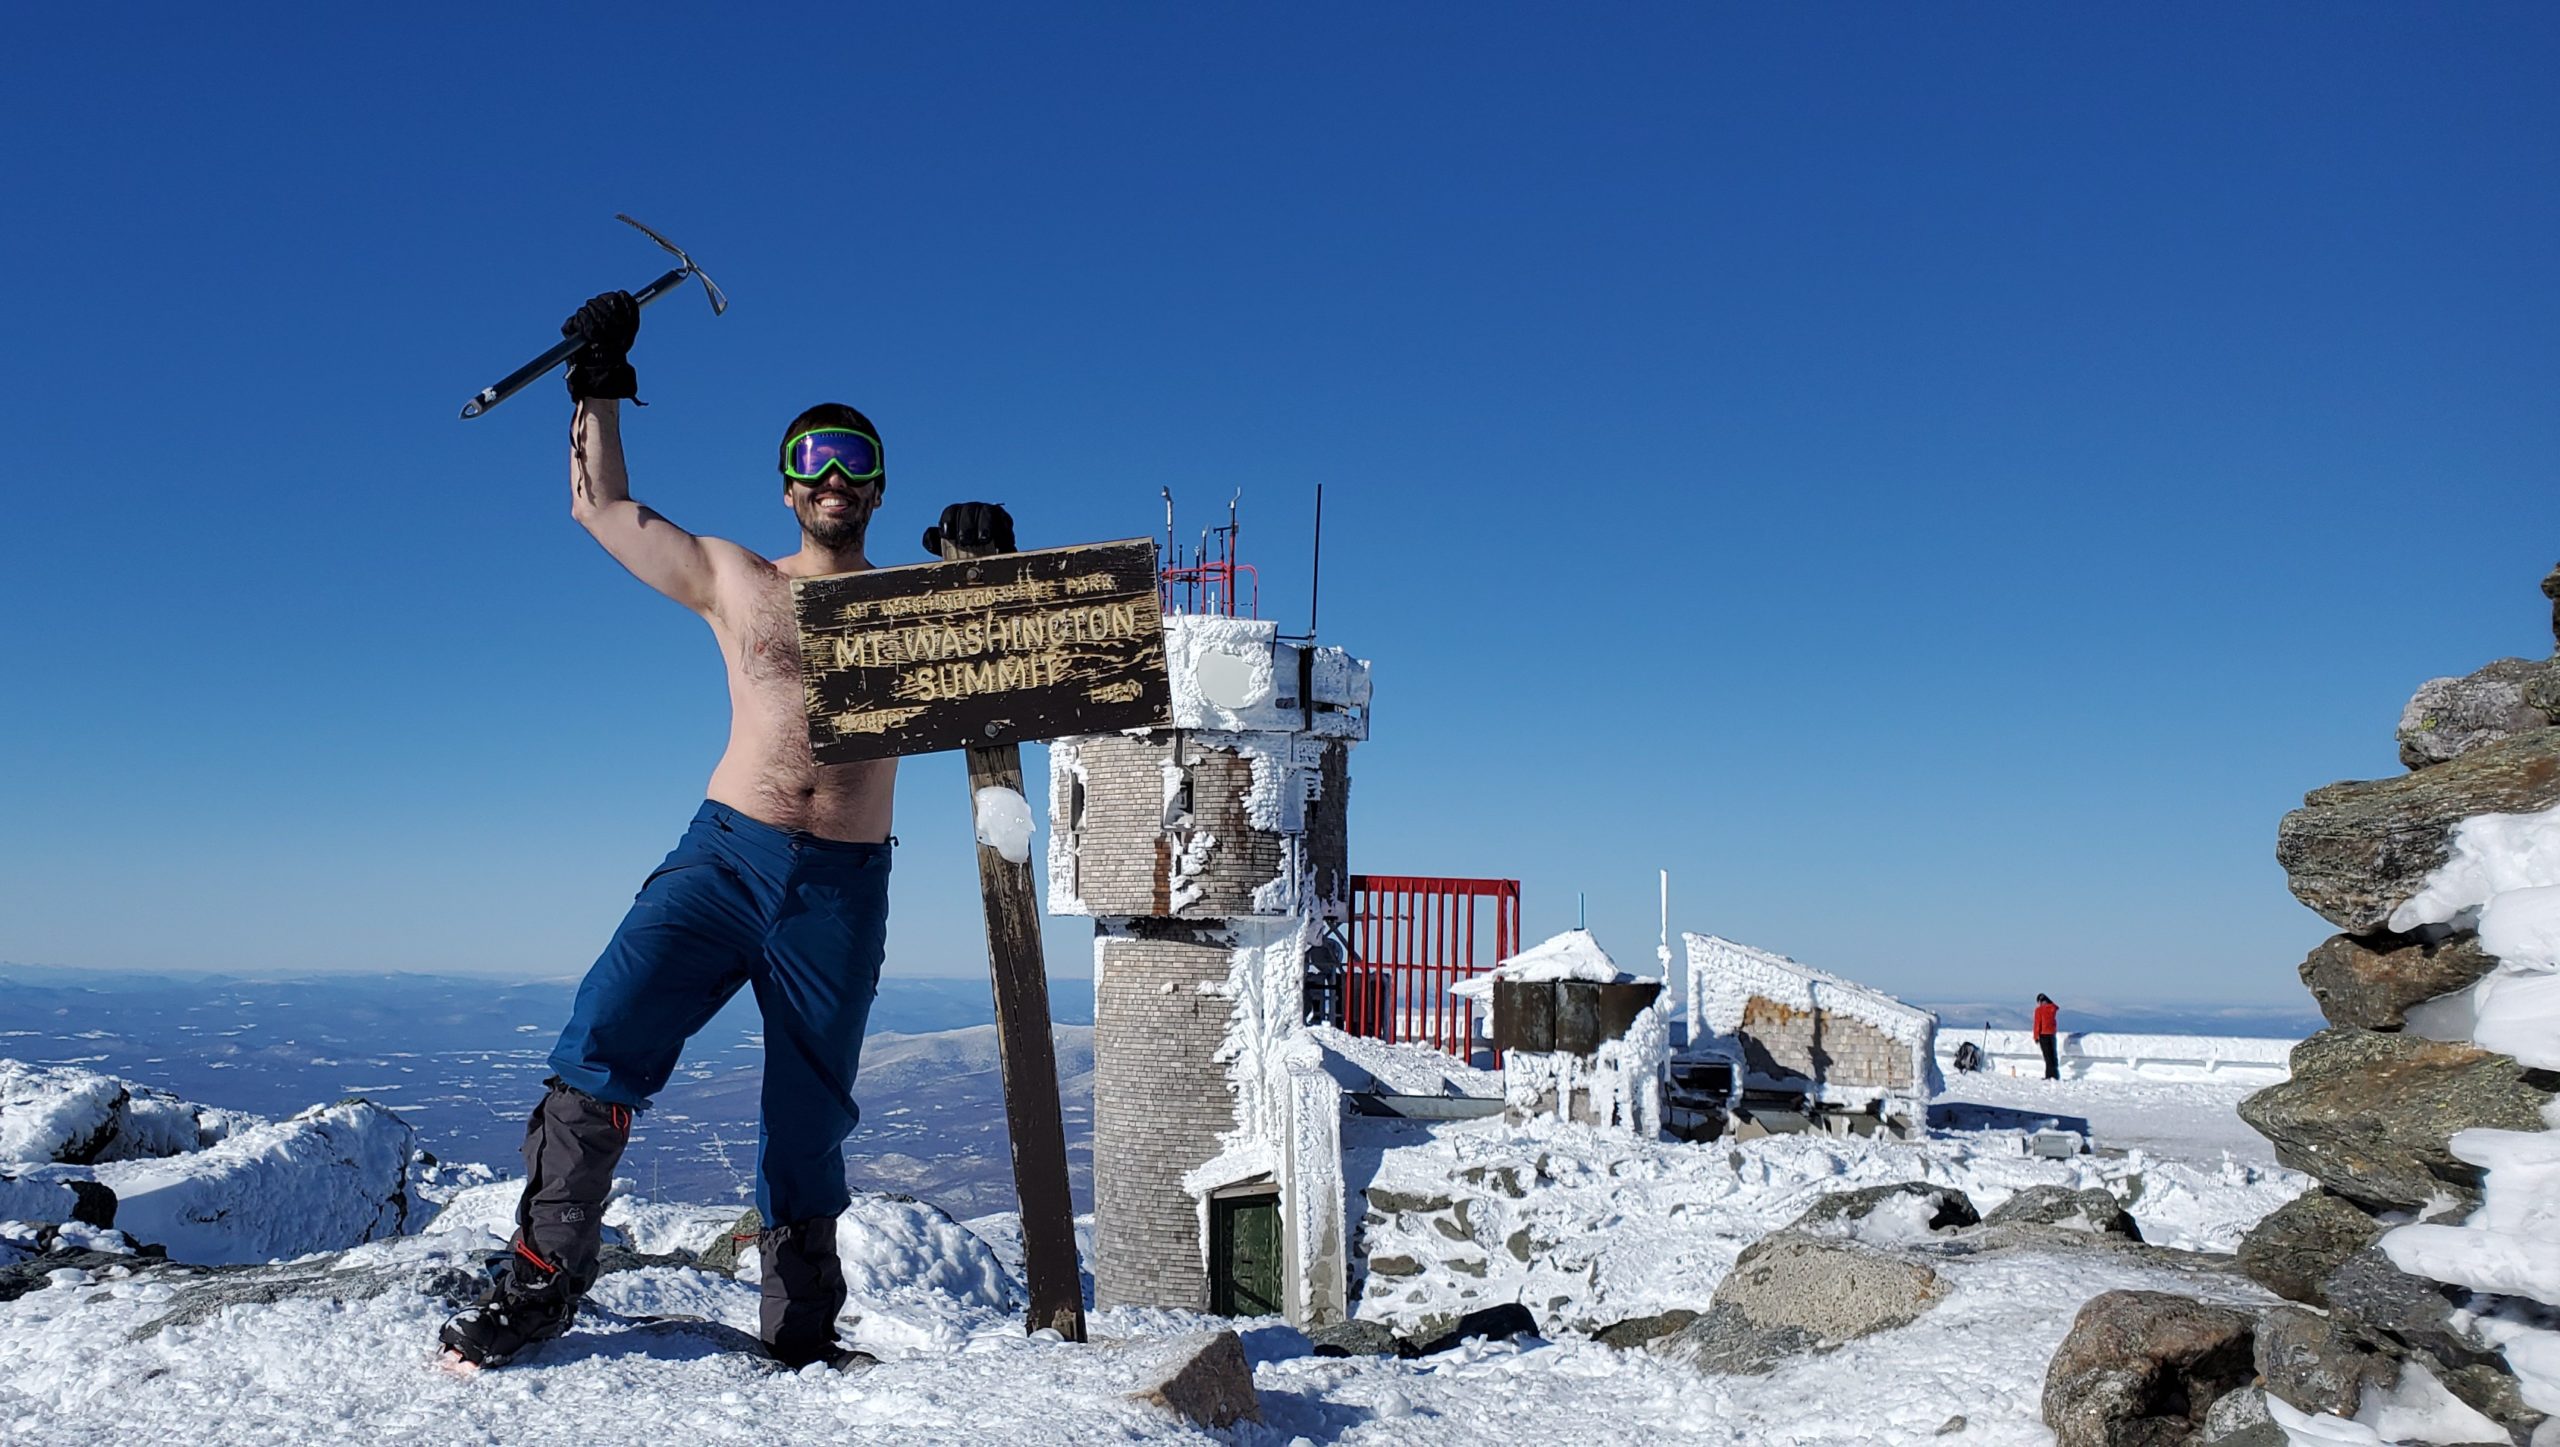 Antonio at the top of Mt. Washington.